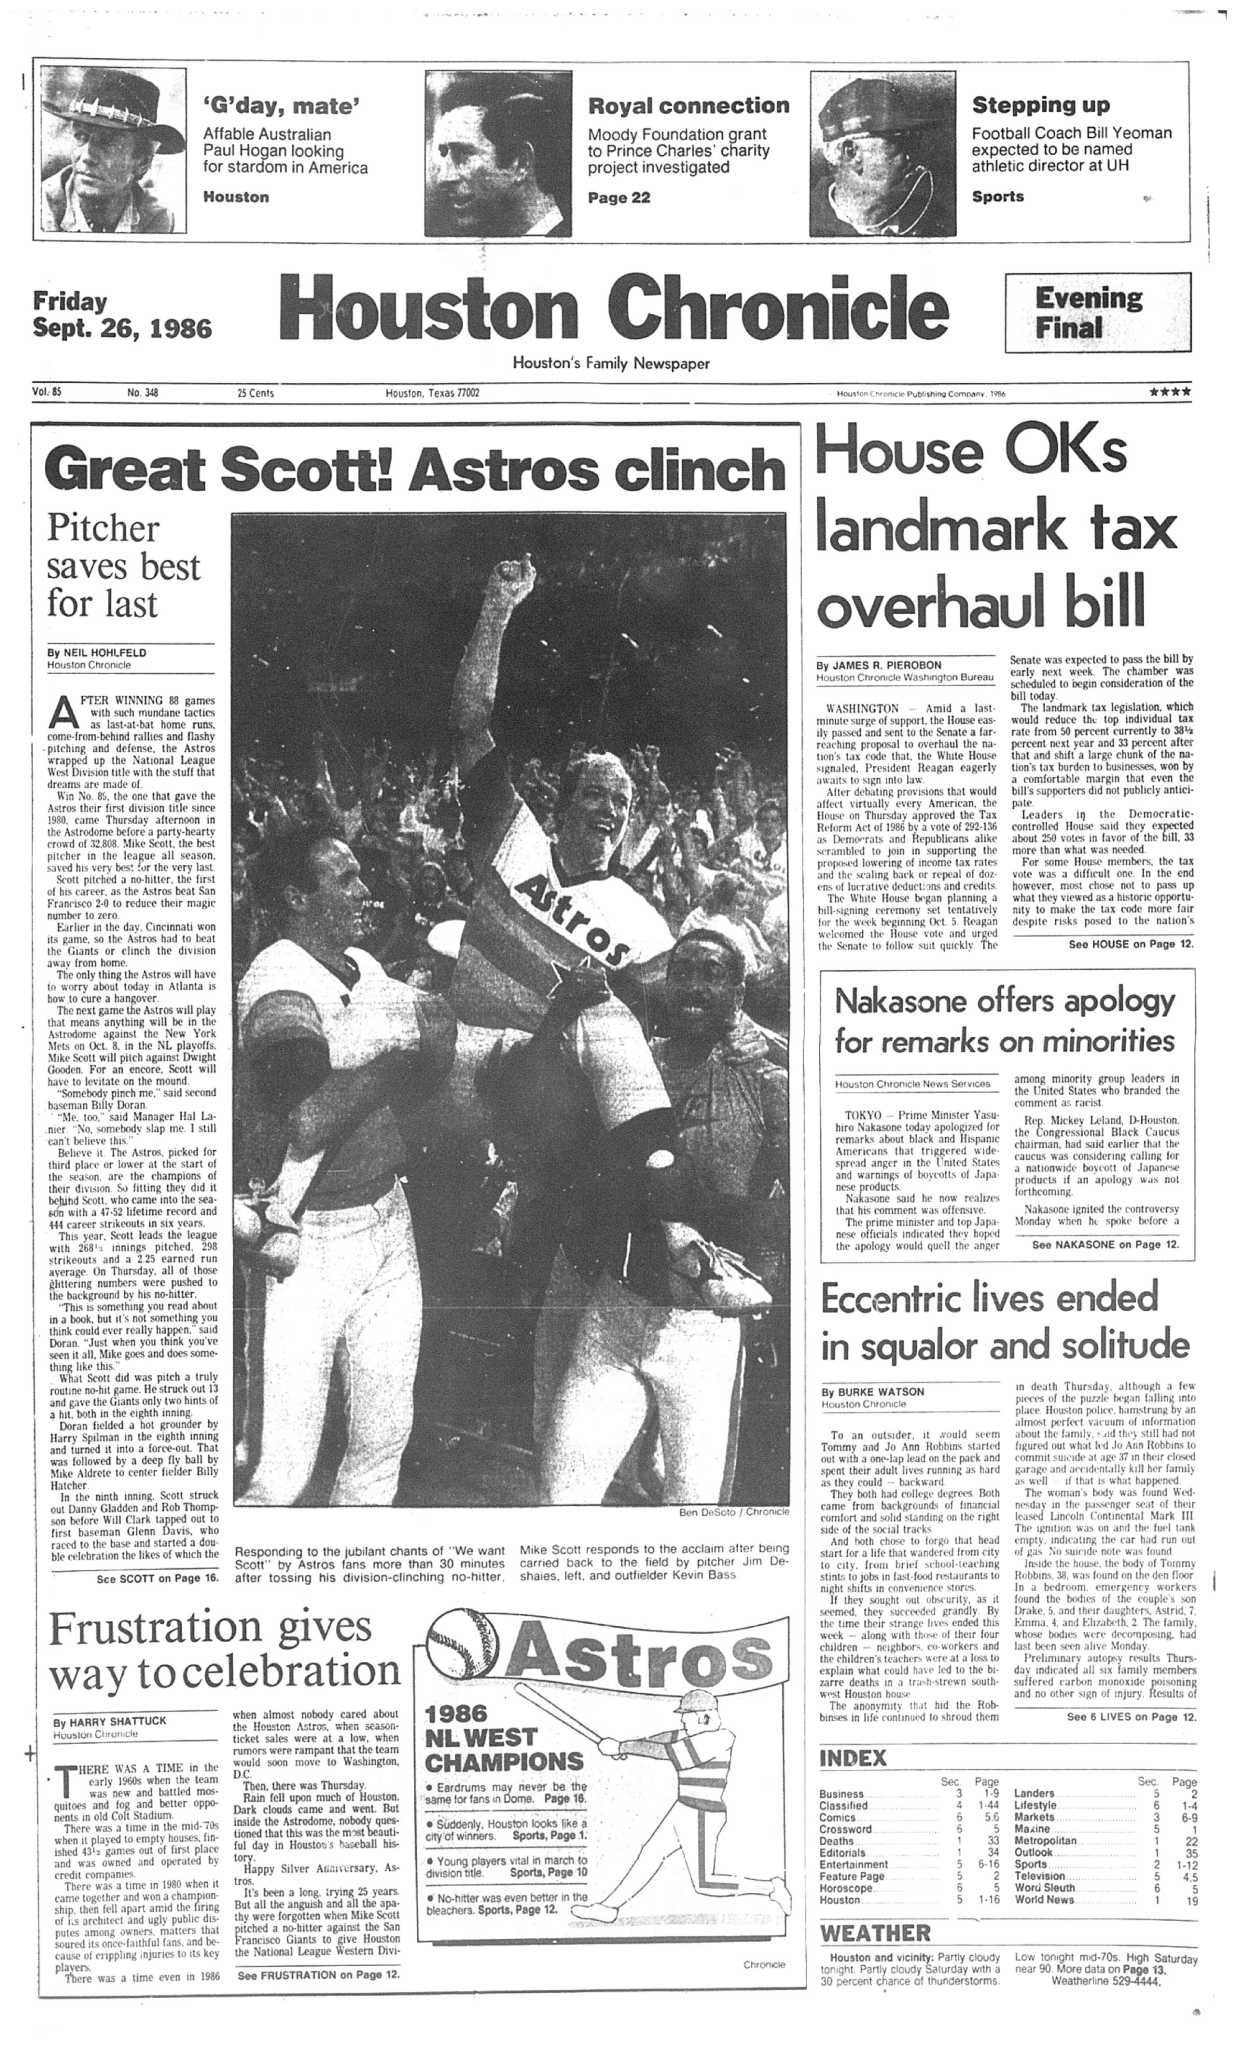 Atlanta Braves vs Houston Astros (6-12-1988) Mike Scott And His